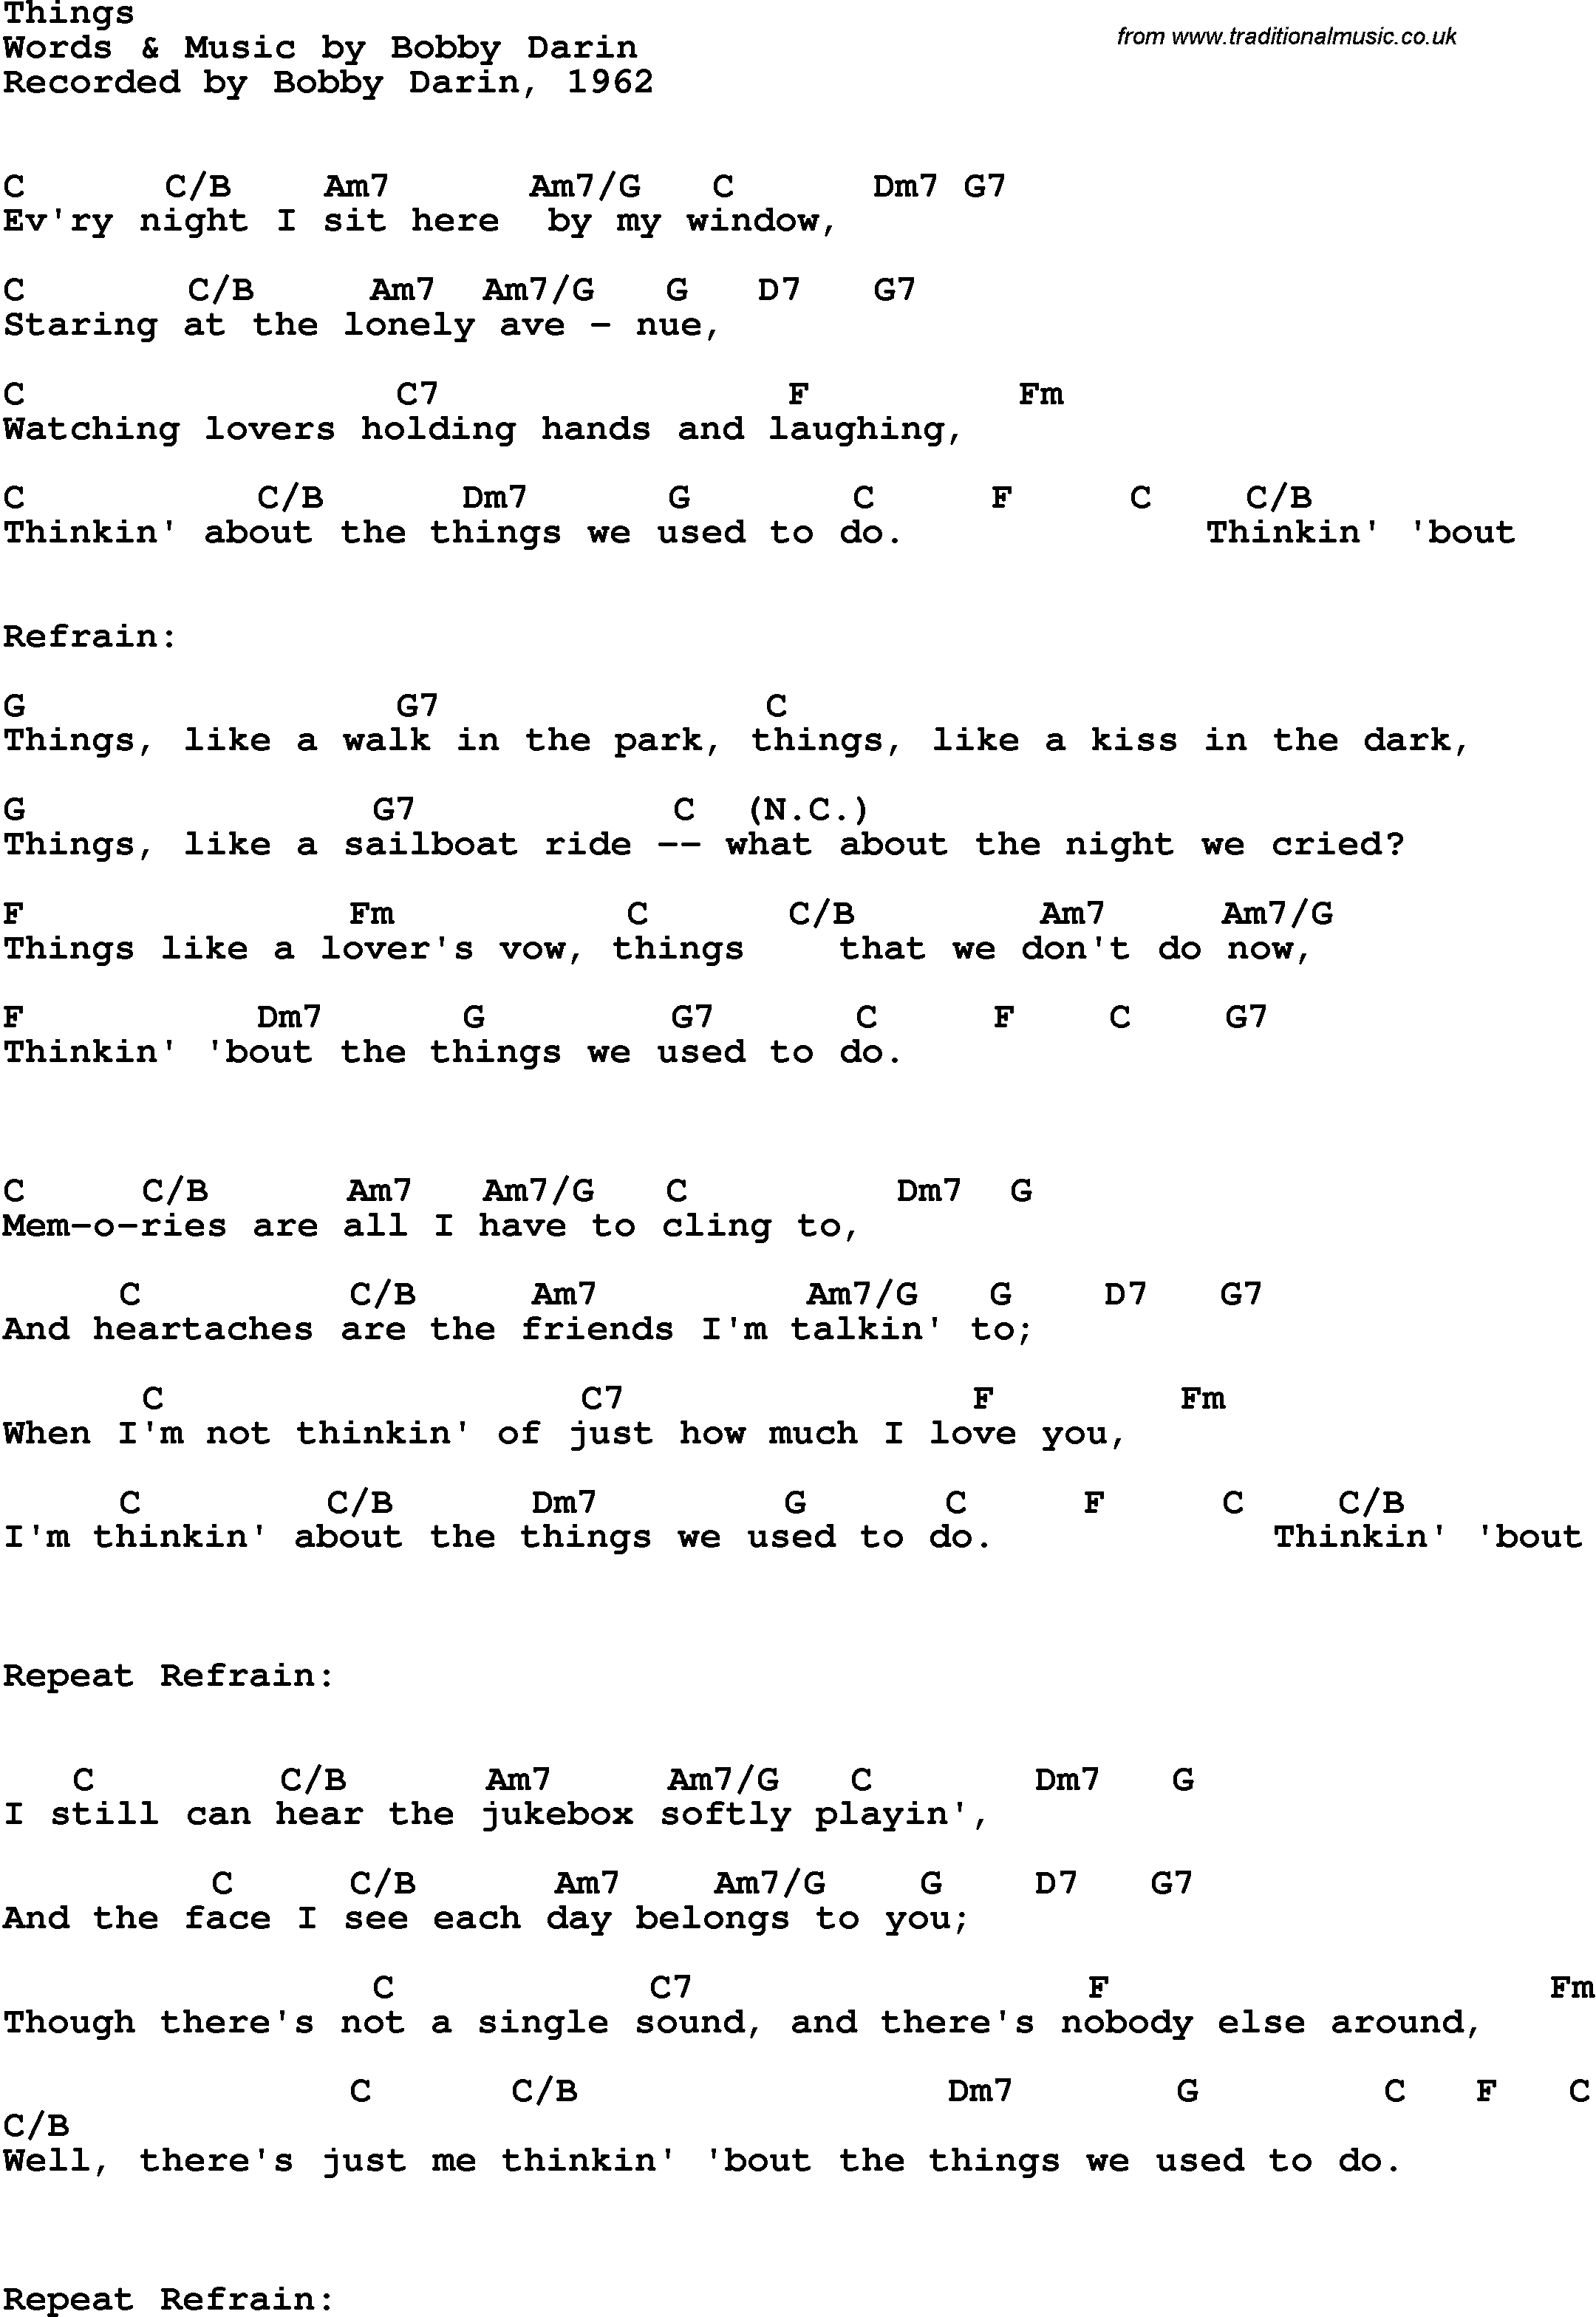 Song Lyrics with guitar chords for Things - Bobby Darin, 1962